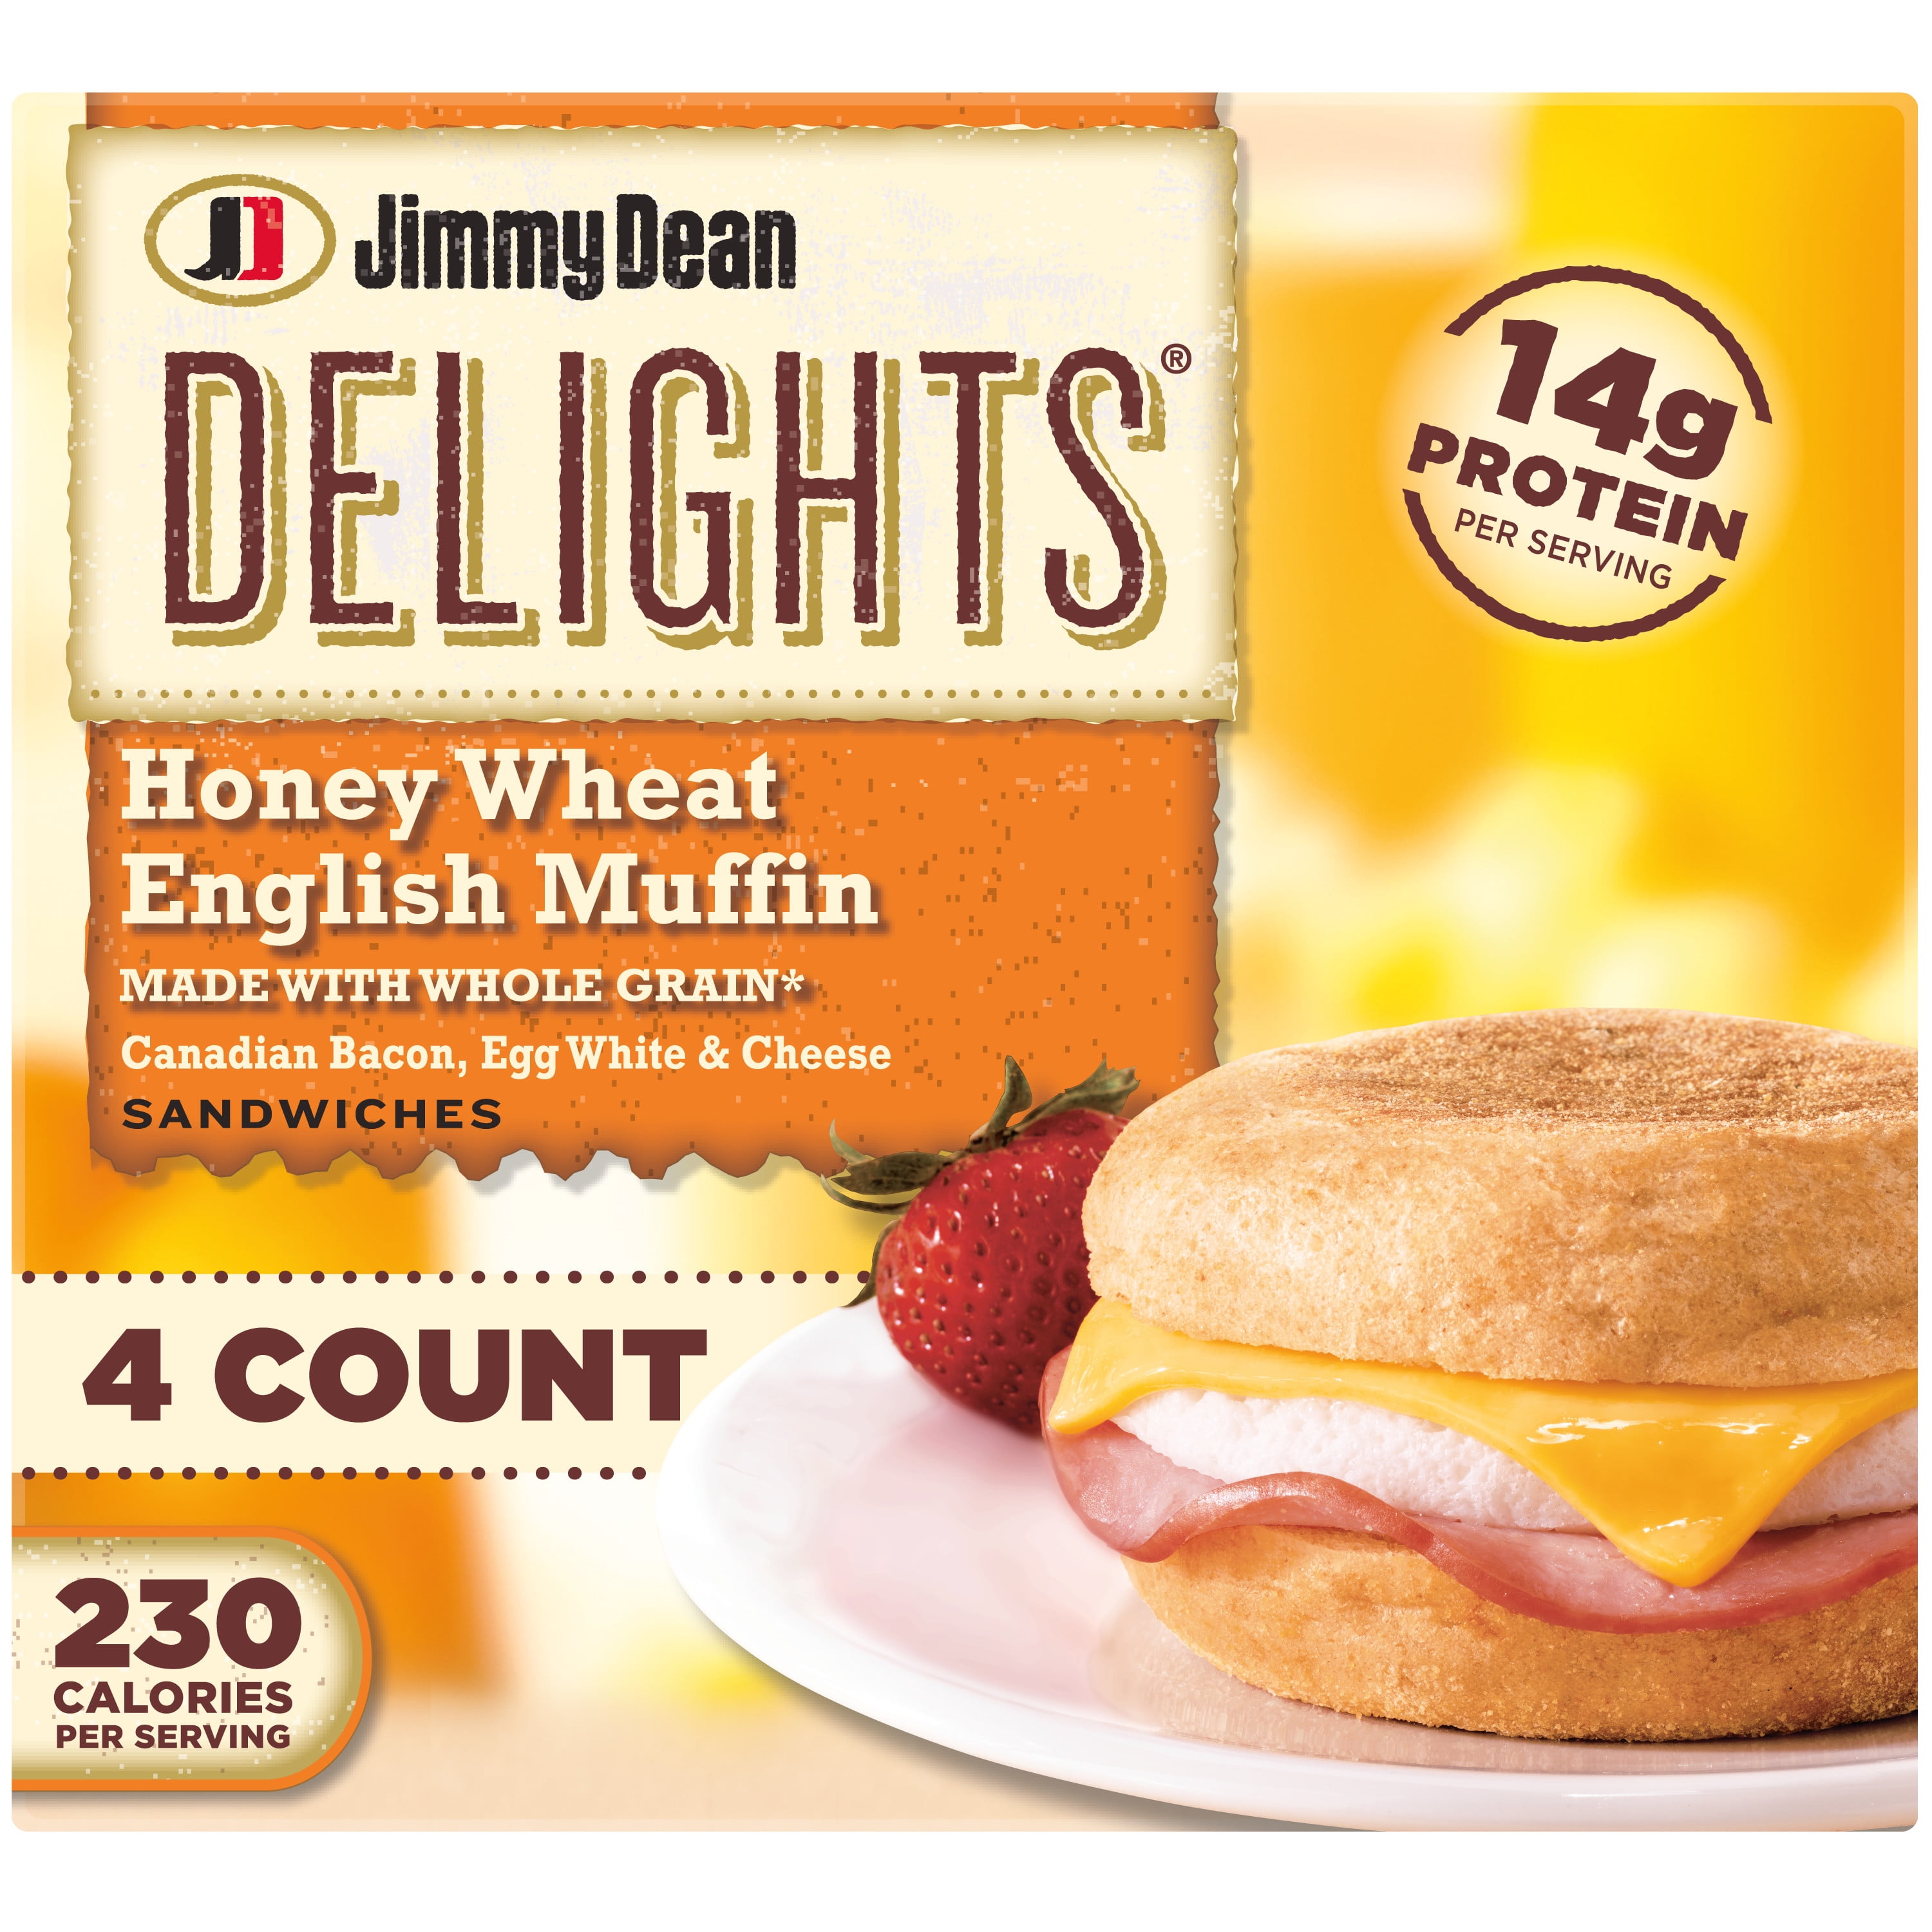 Jimmy Dean Delights Honey Wheat English Muffin, Bacon Egg White & Cheese Sandwich, 18 oz, 4 Ct (Frozen)